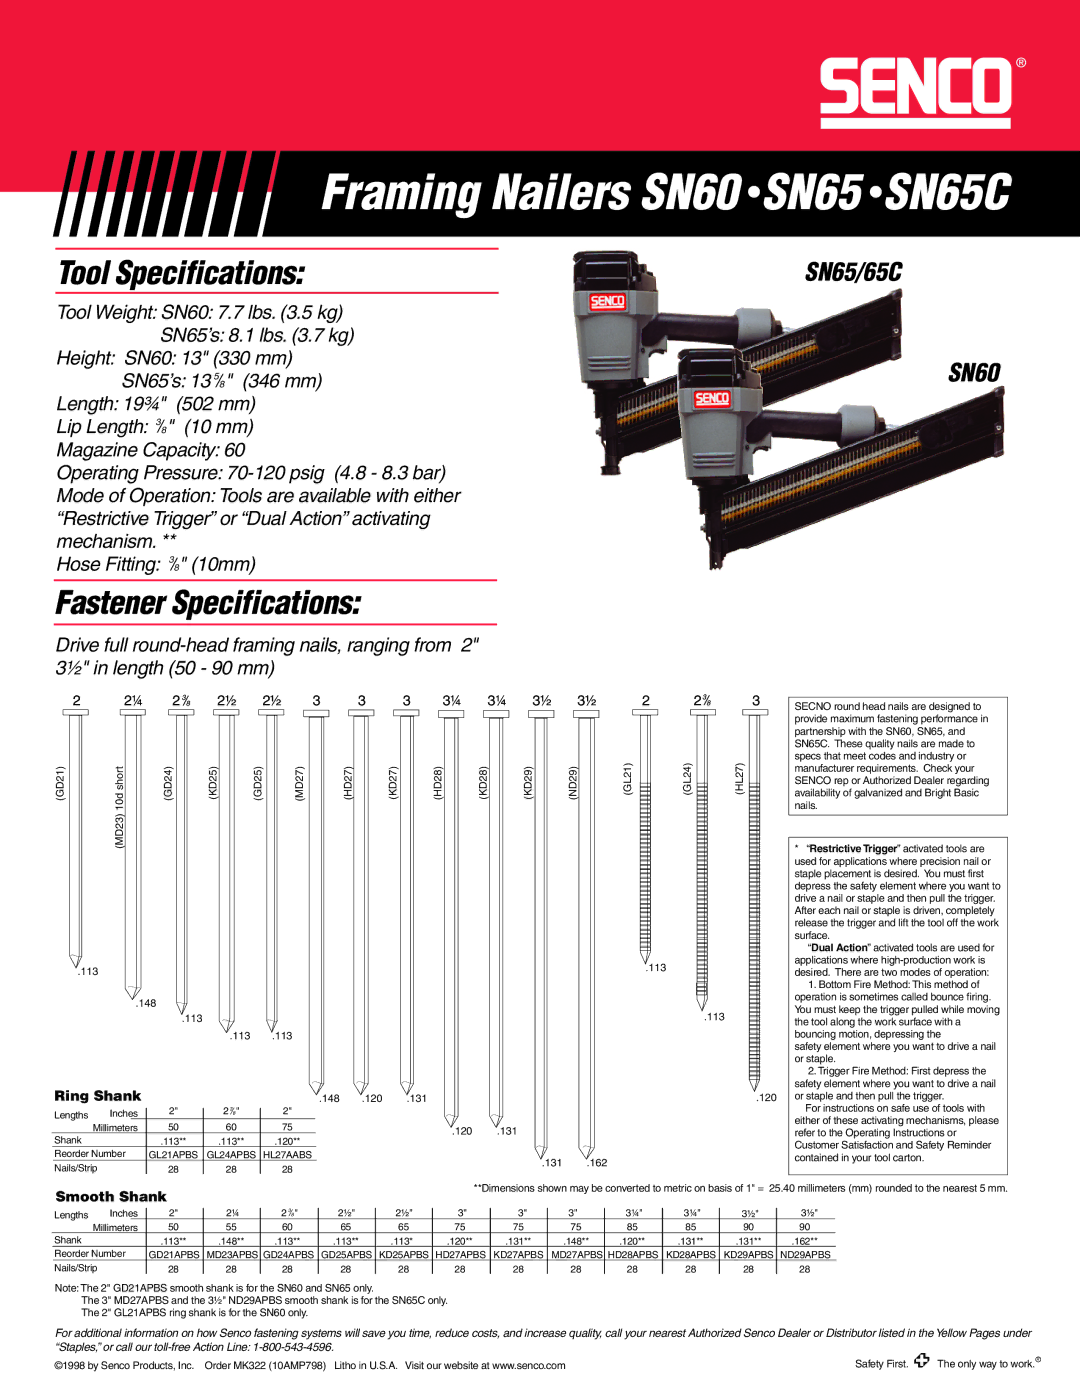 Senco SN65C, SN60 manual Tool Specifications, Fastener Specifications, Ring Shank, Smooth Shank 